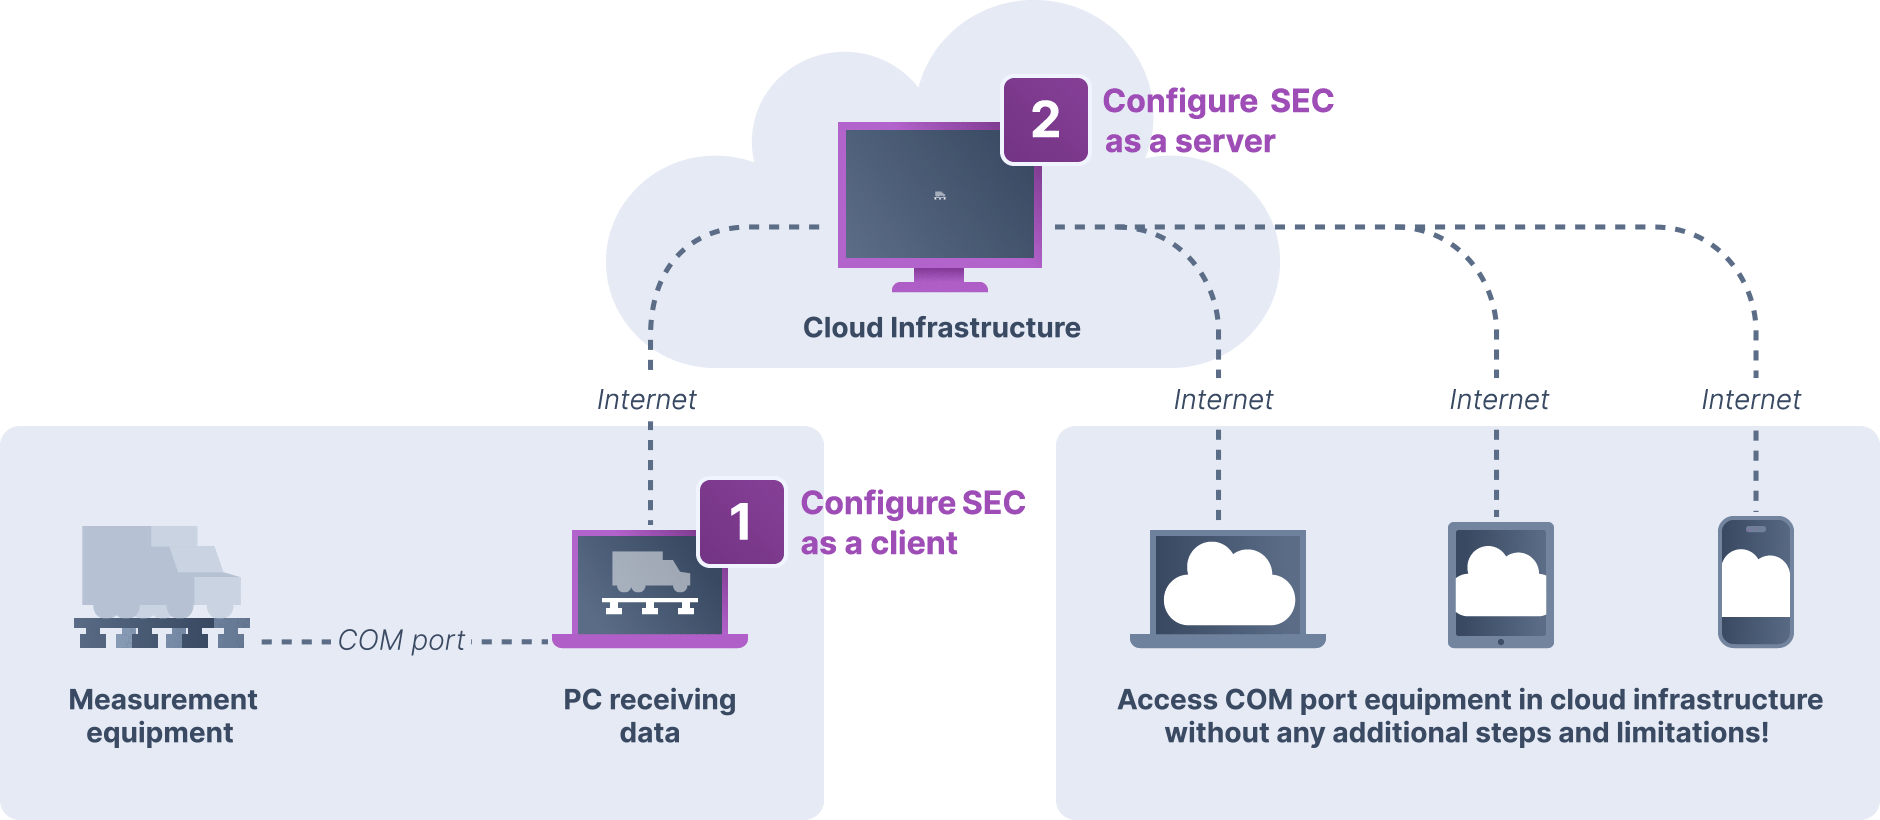 Serial port Redirector usage scenario for cloud infrastructure.